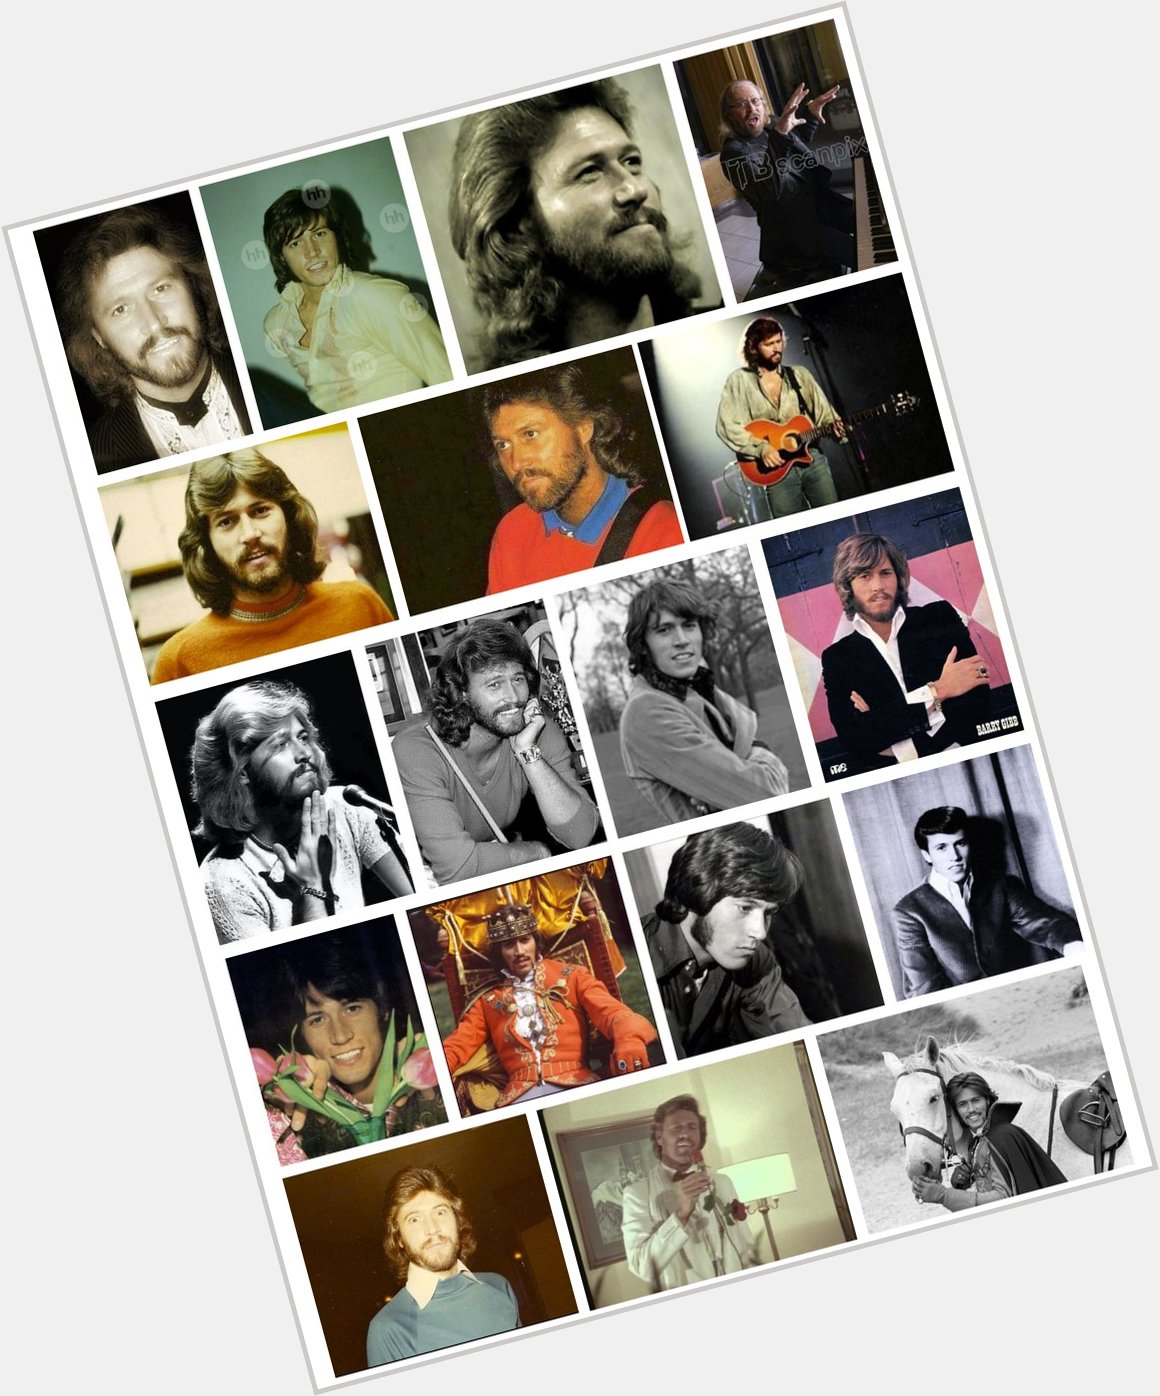  Wishing Sir Barry Gibb a very Happy Birthday today!   